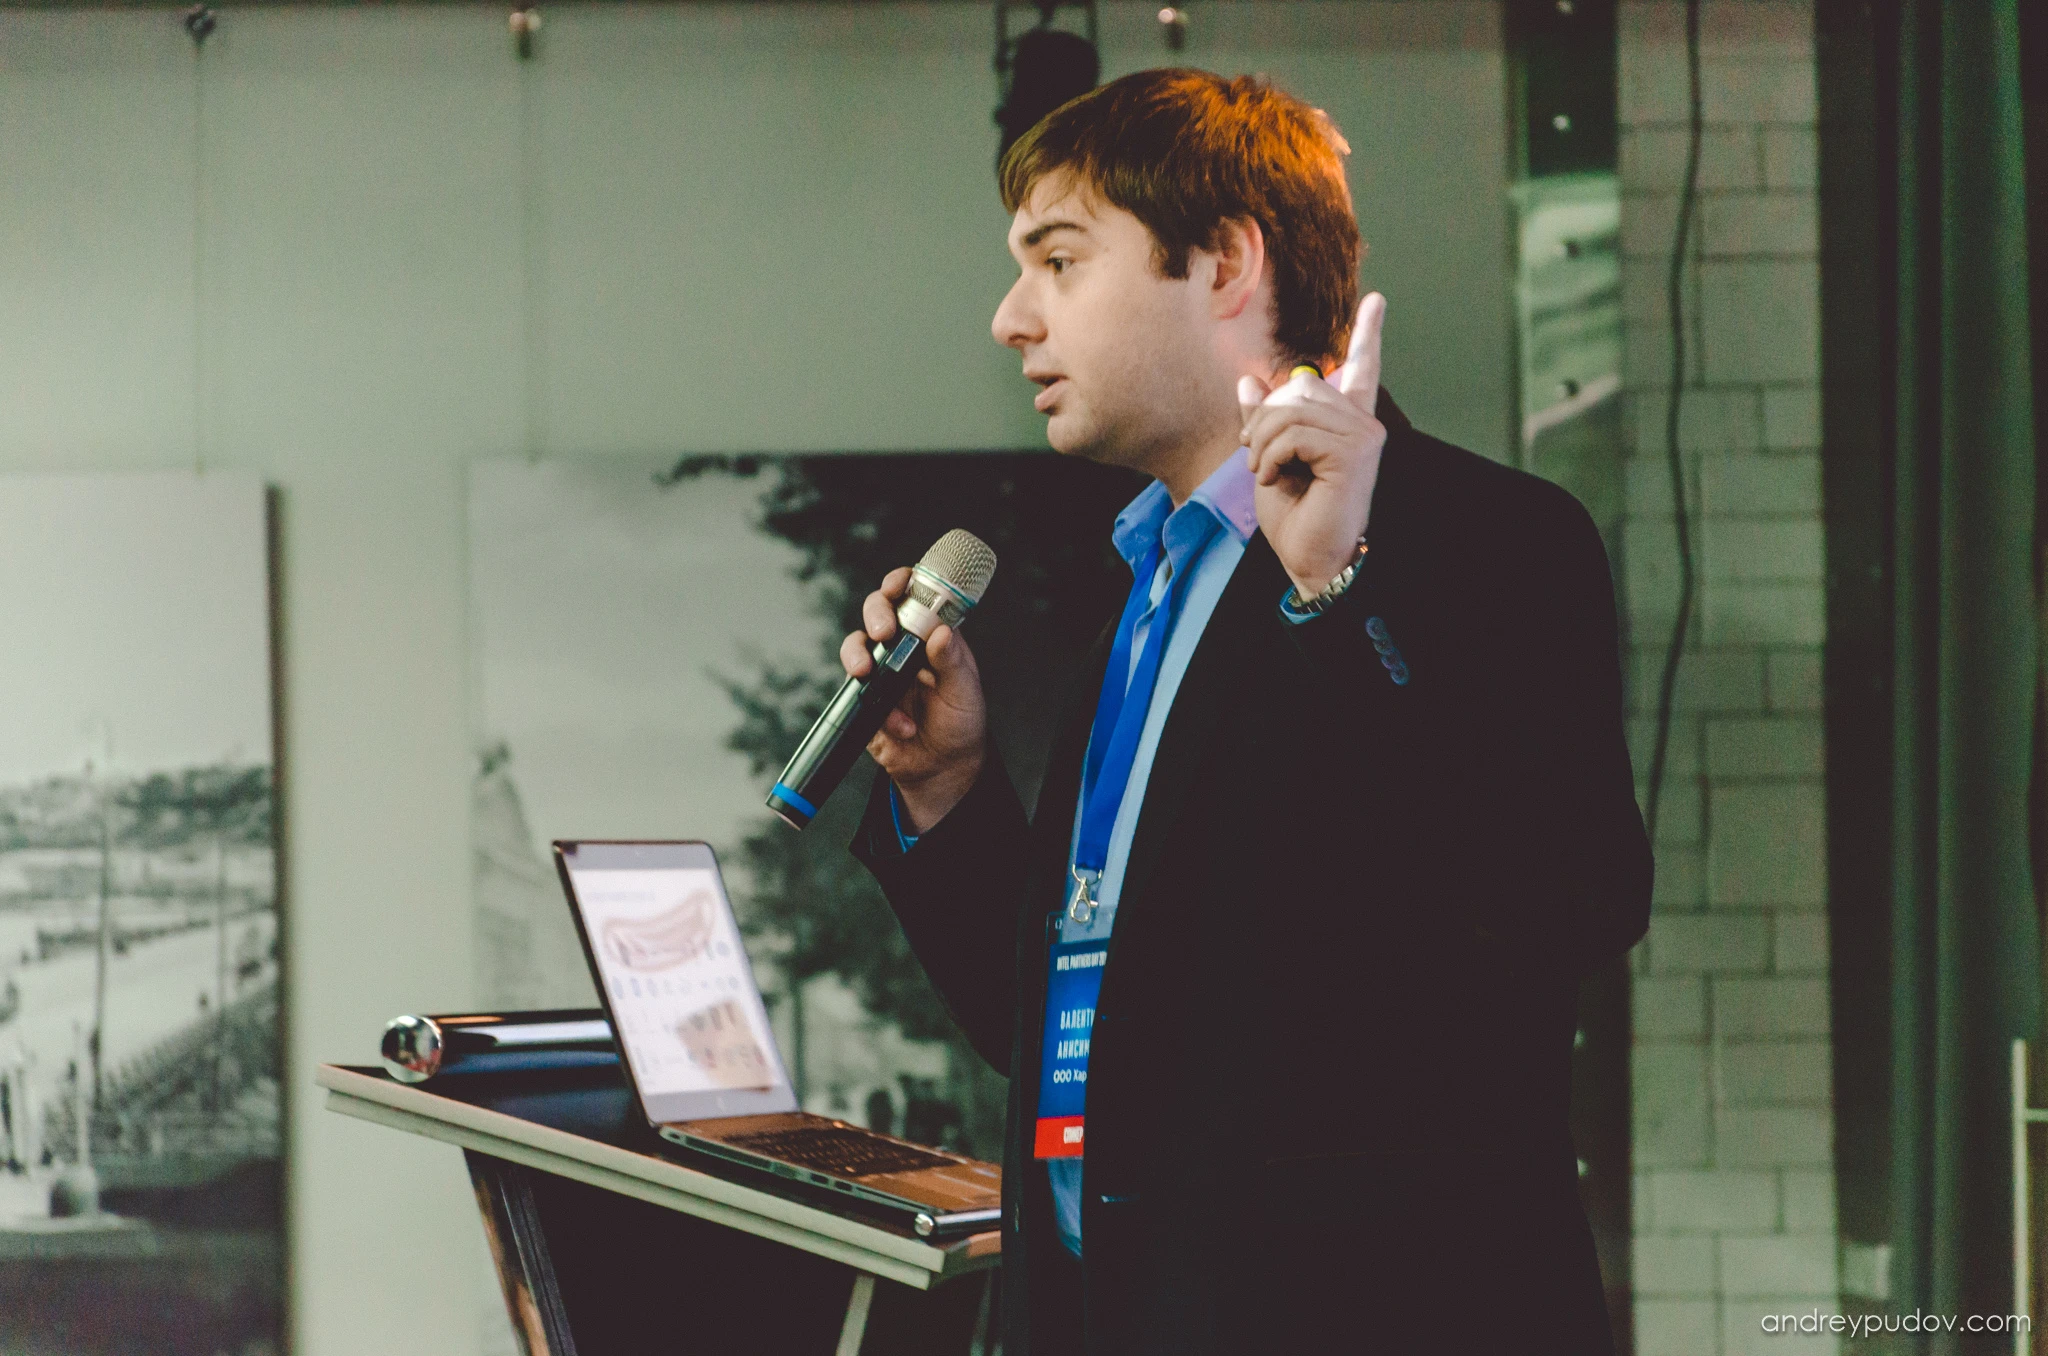 Intel Partners Day - Valentin Anisimov - Principal Software Architect at Harman